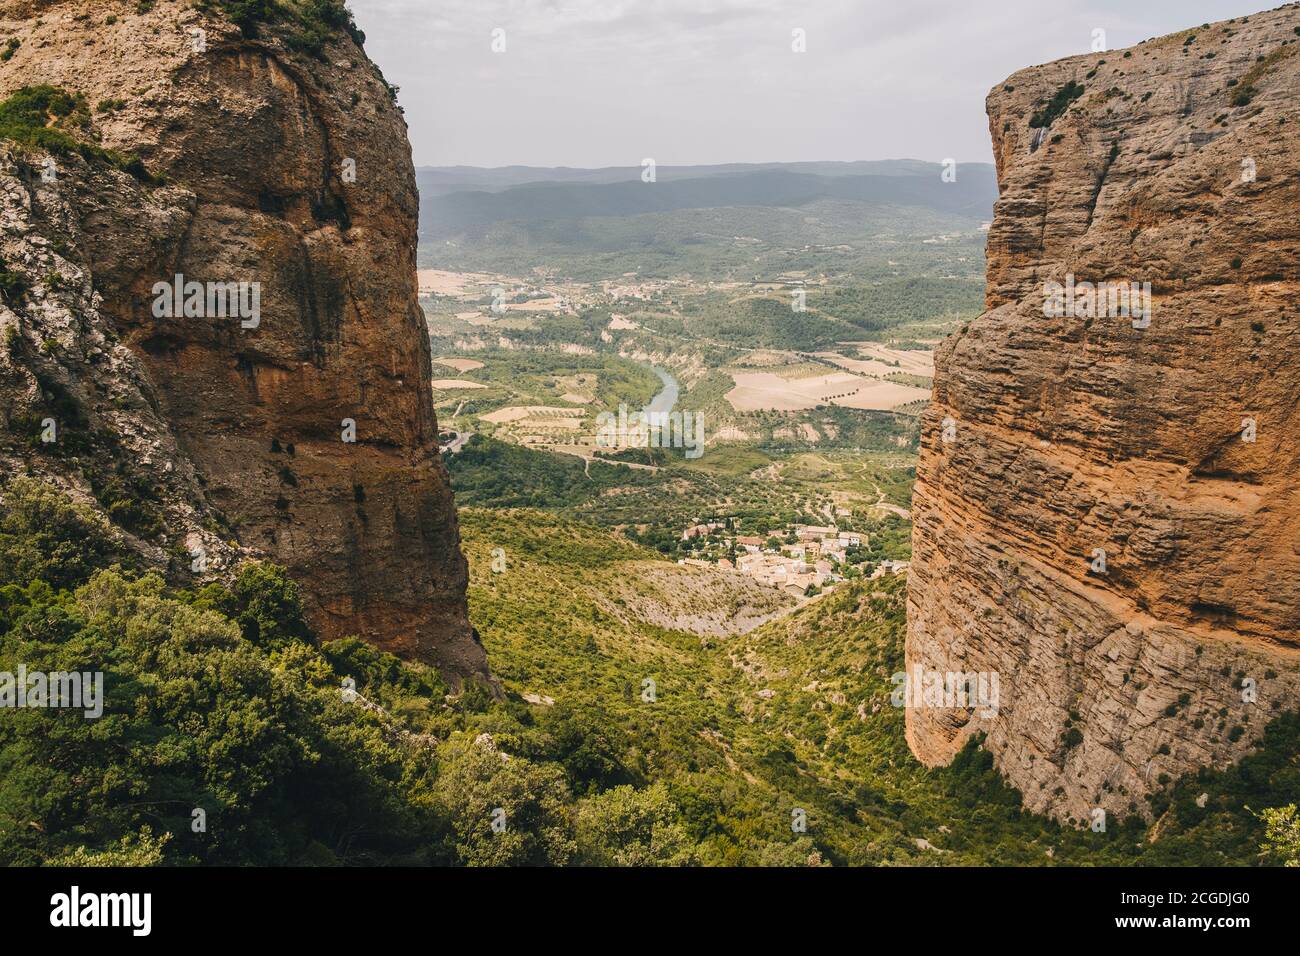 Riglos Village unter den konglomeraten Felsformationen der Mallos de Riglos, Huesca, Aragon, Spanien. Etwa 300 Meter unter dem Aussichtspunkt, gelegen Stockfoto